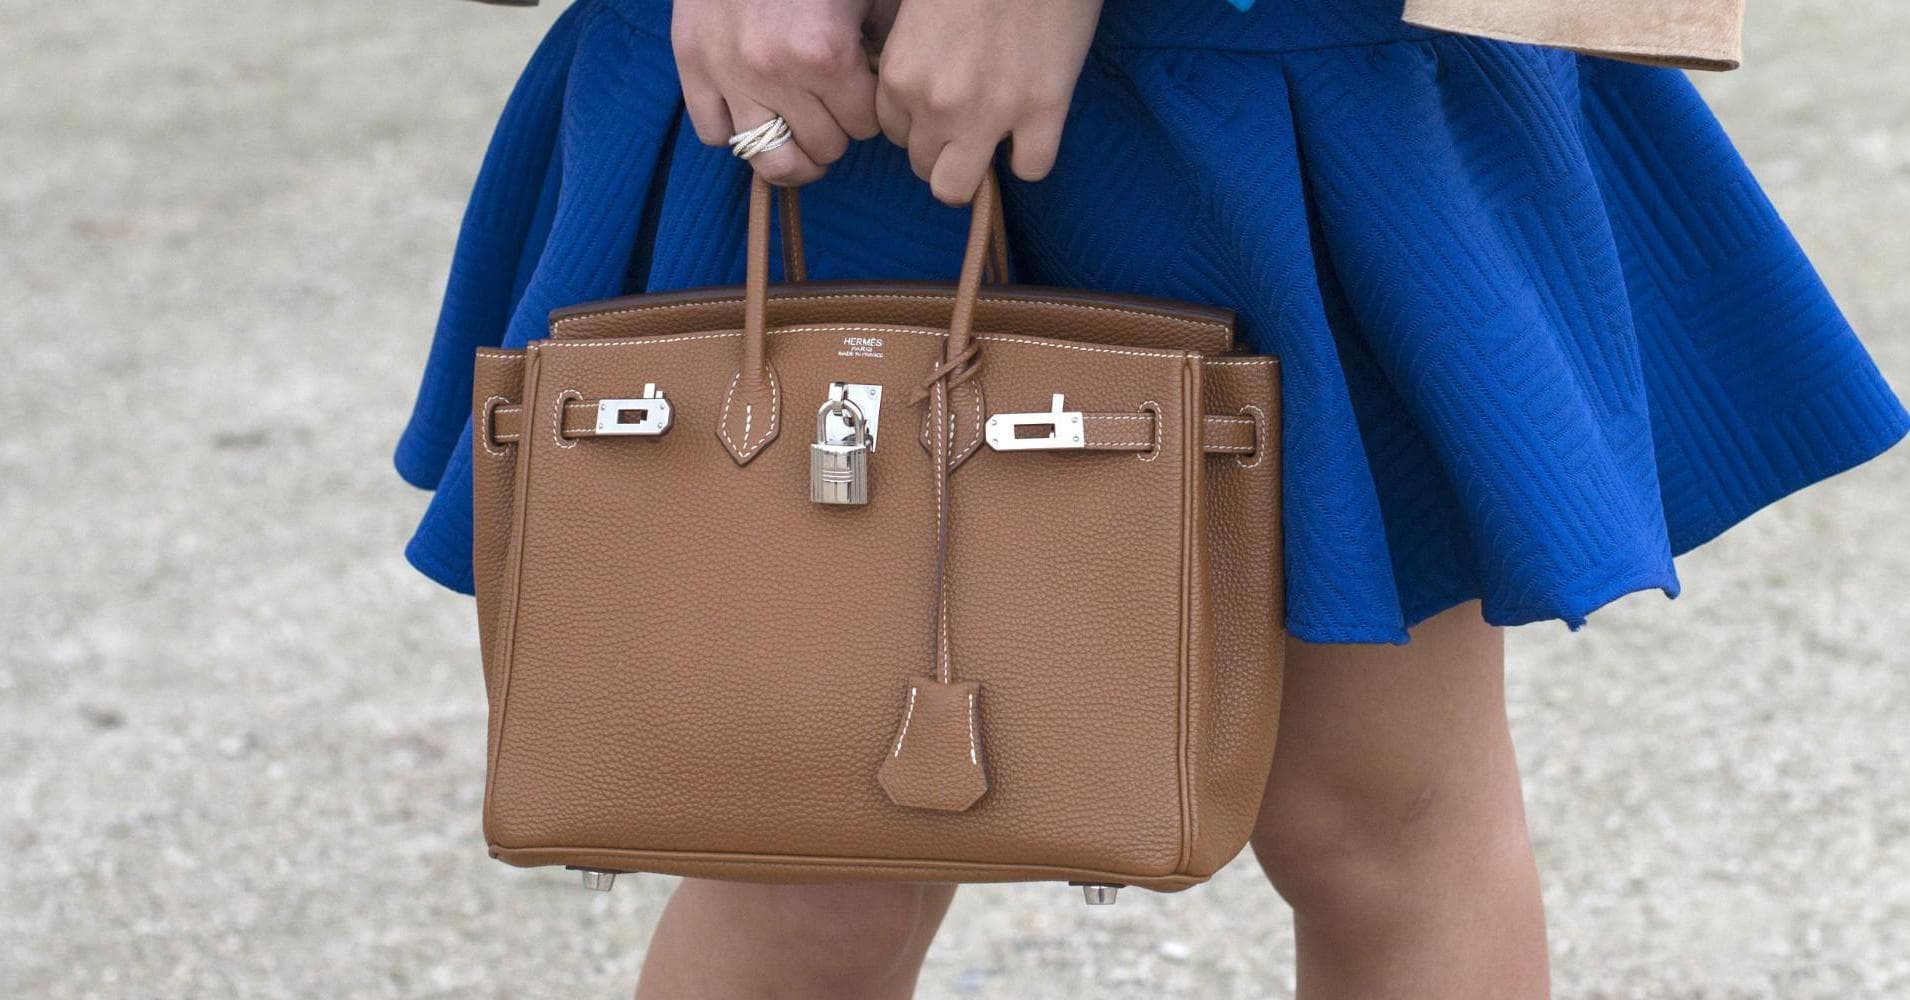 most expensive purse designer brand